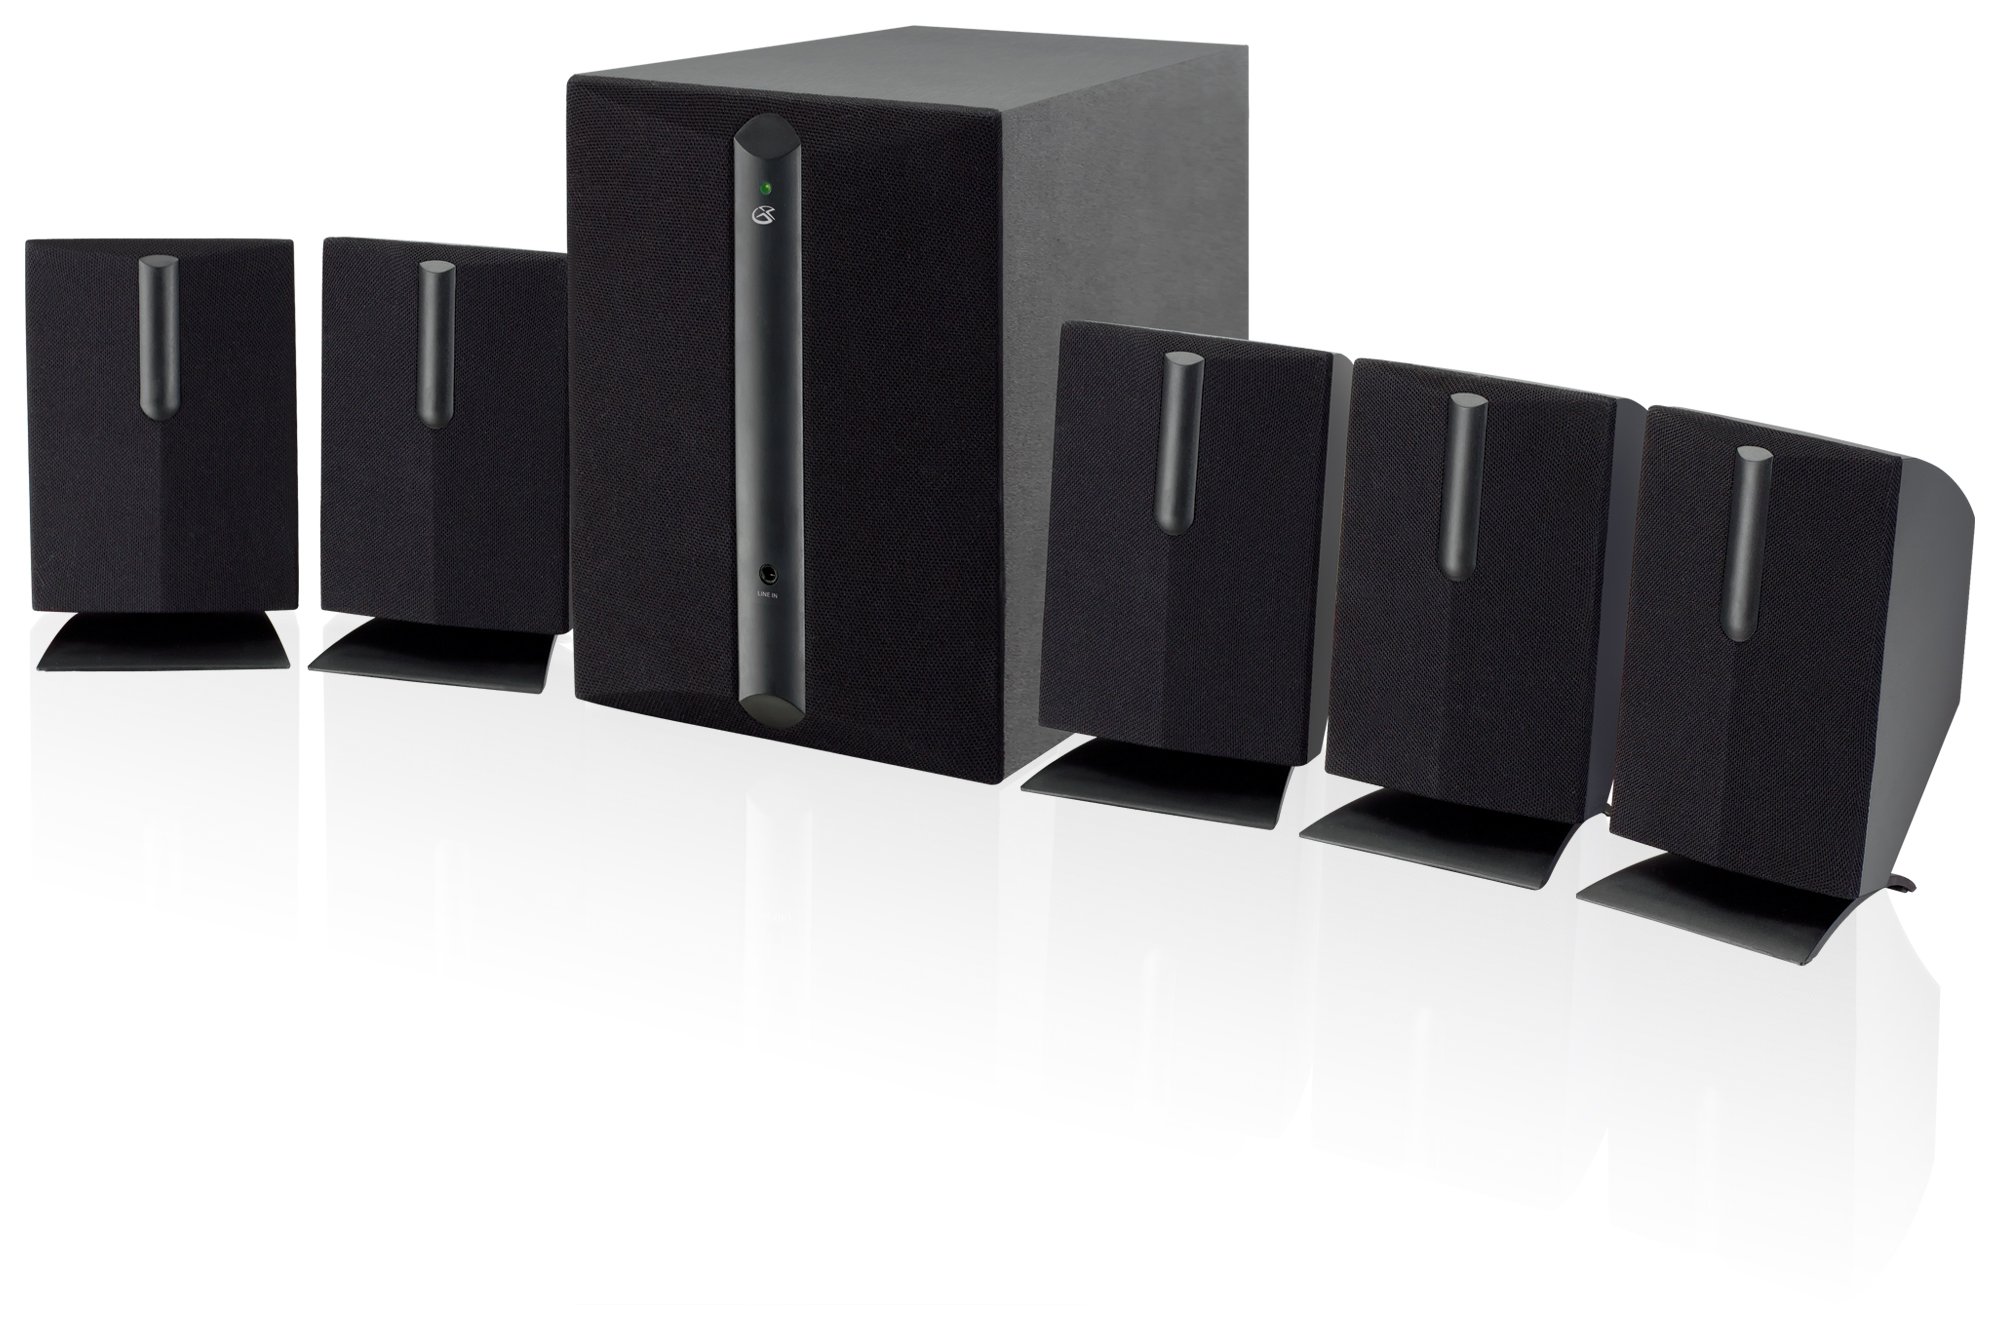 iLive HT050B 5.1 Channel Home Theater Speaker System Black6 並行輸入品